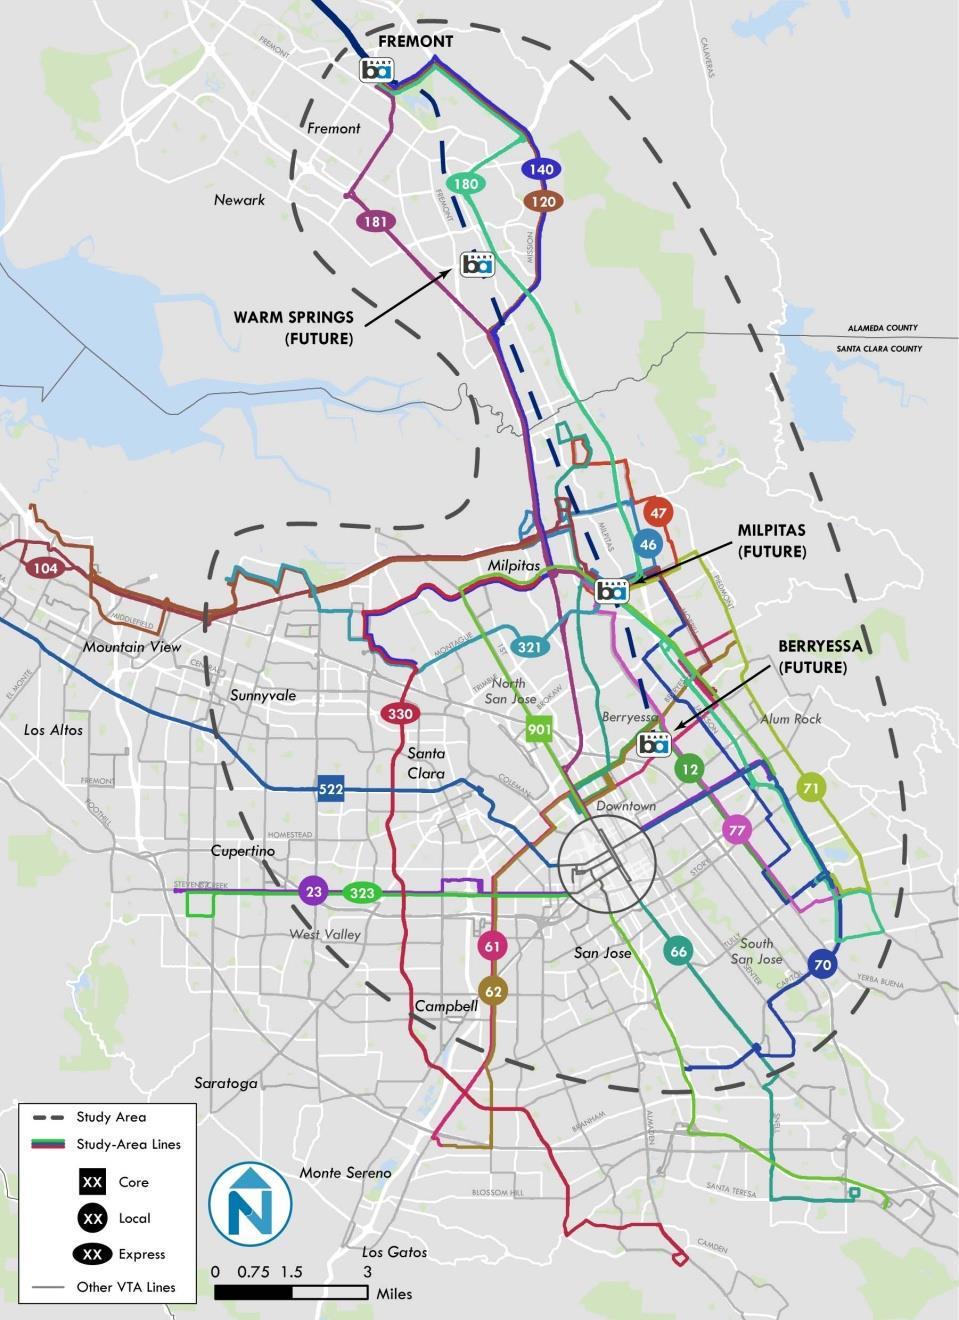 Service Included in Study Light rail service Santa Clara/Alum Rock Rapid & Berryessa Connector